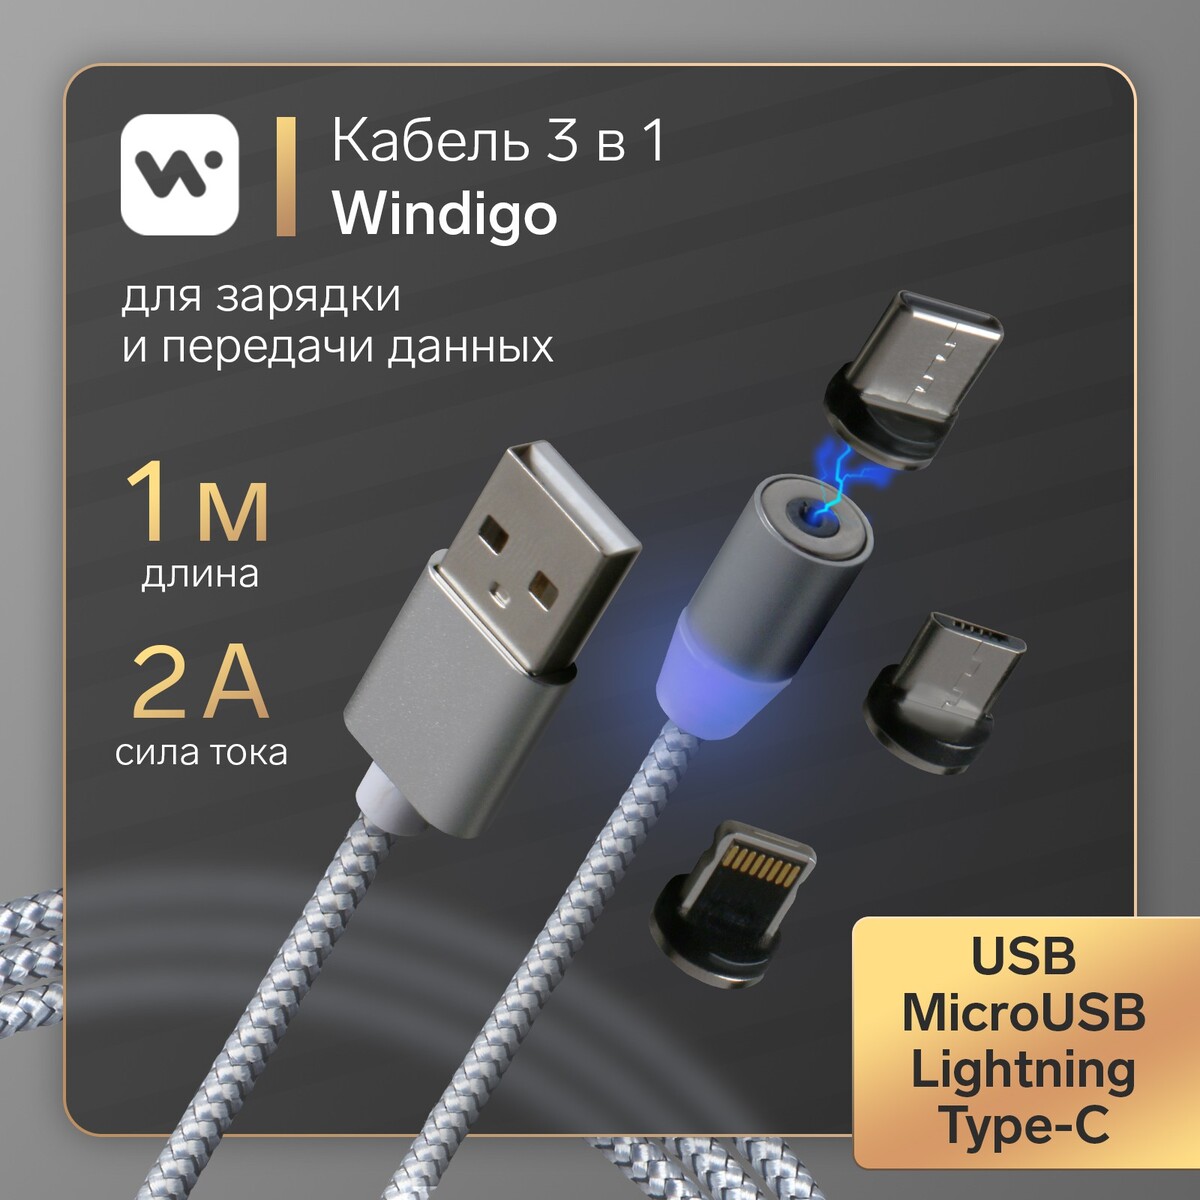 Кабель windigo, 3 в 1, microusb/lightning/type-c - usb, магнитный, 2 а, нейлон, 1 м, серебр. кабель partner магнитный usb 2 0 apple iphone ipod ipad с разъемом 8pin 1 2м нейлон пр033505